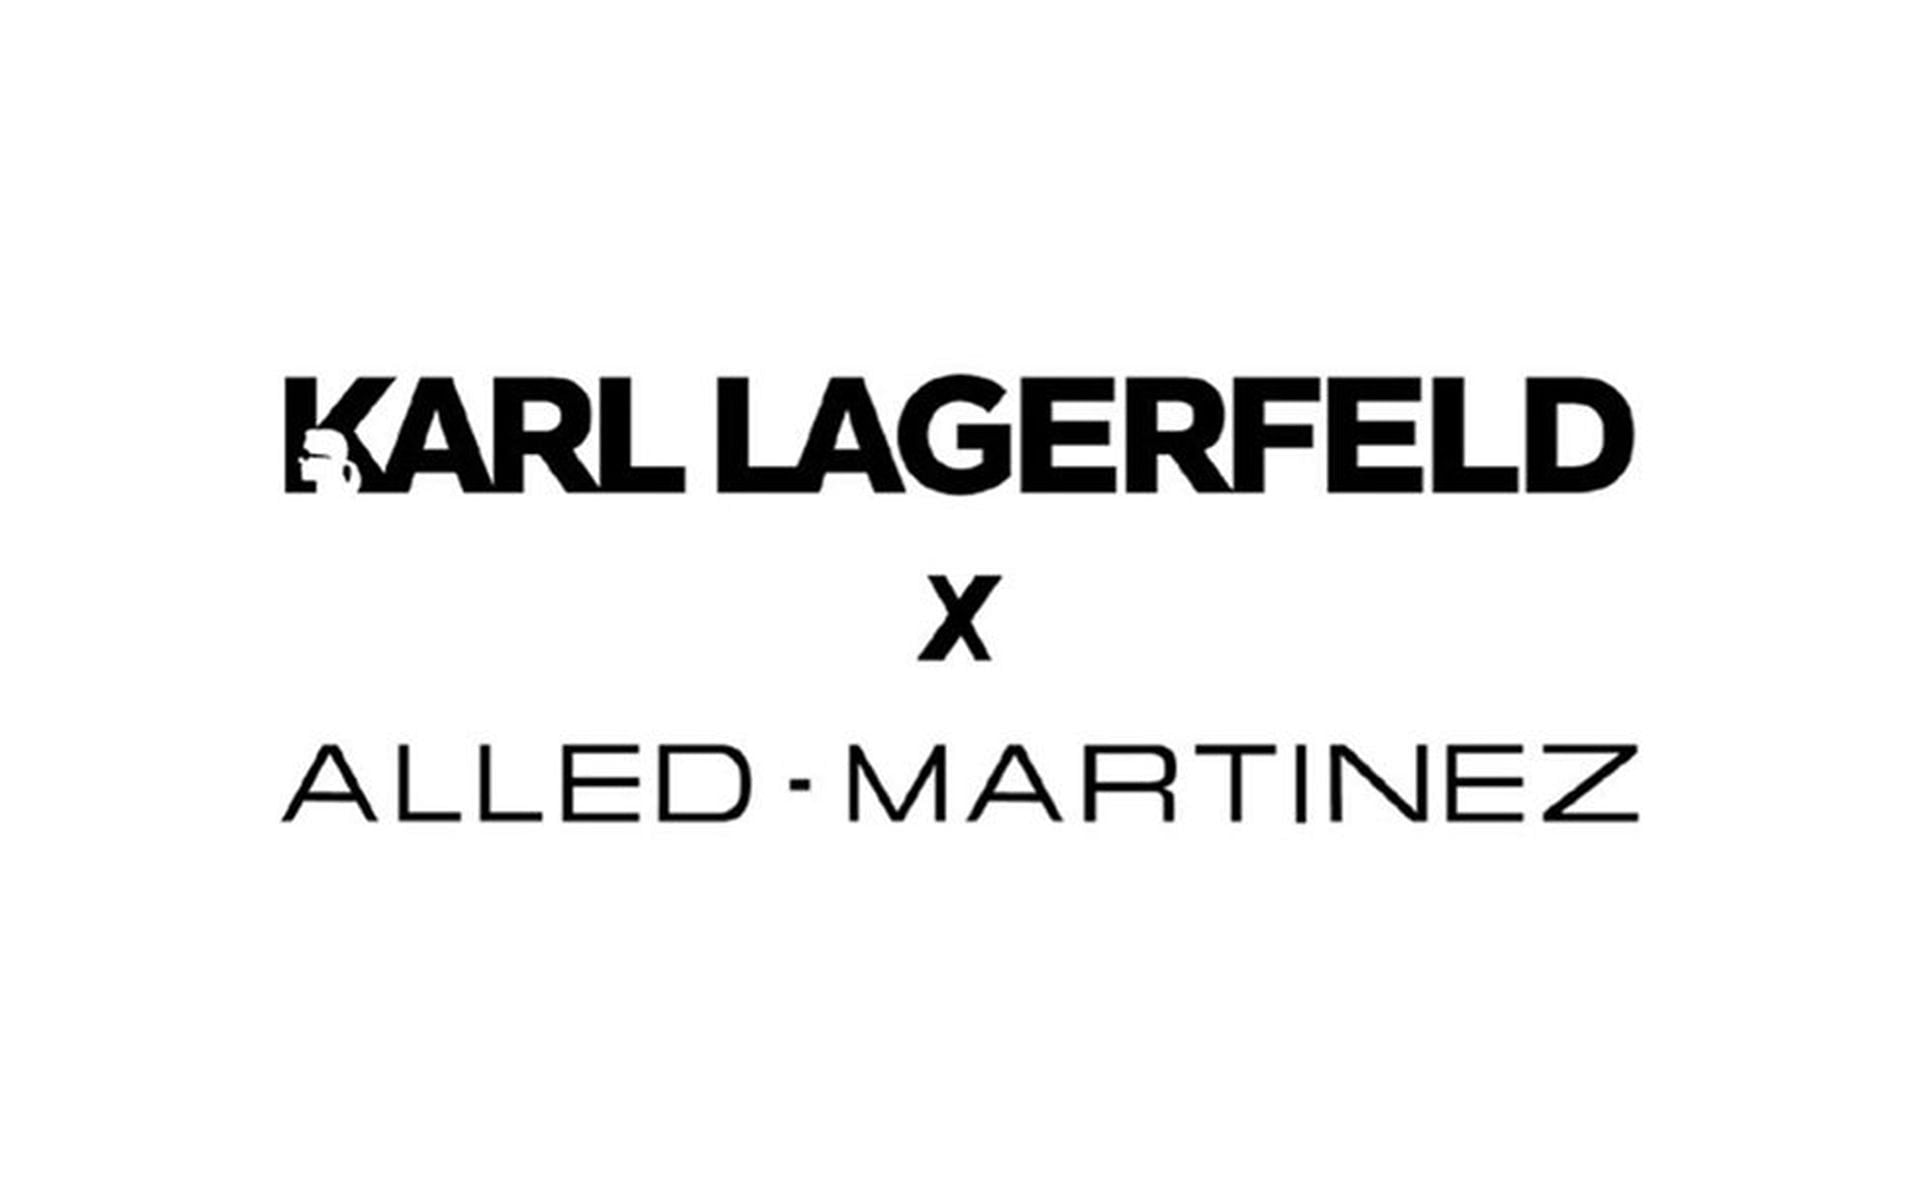 Karl Lagerfeld x Archie Alled Martinez (Image via @karllagerfeld/ Instagram)